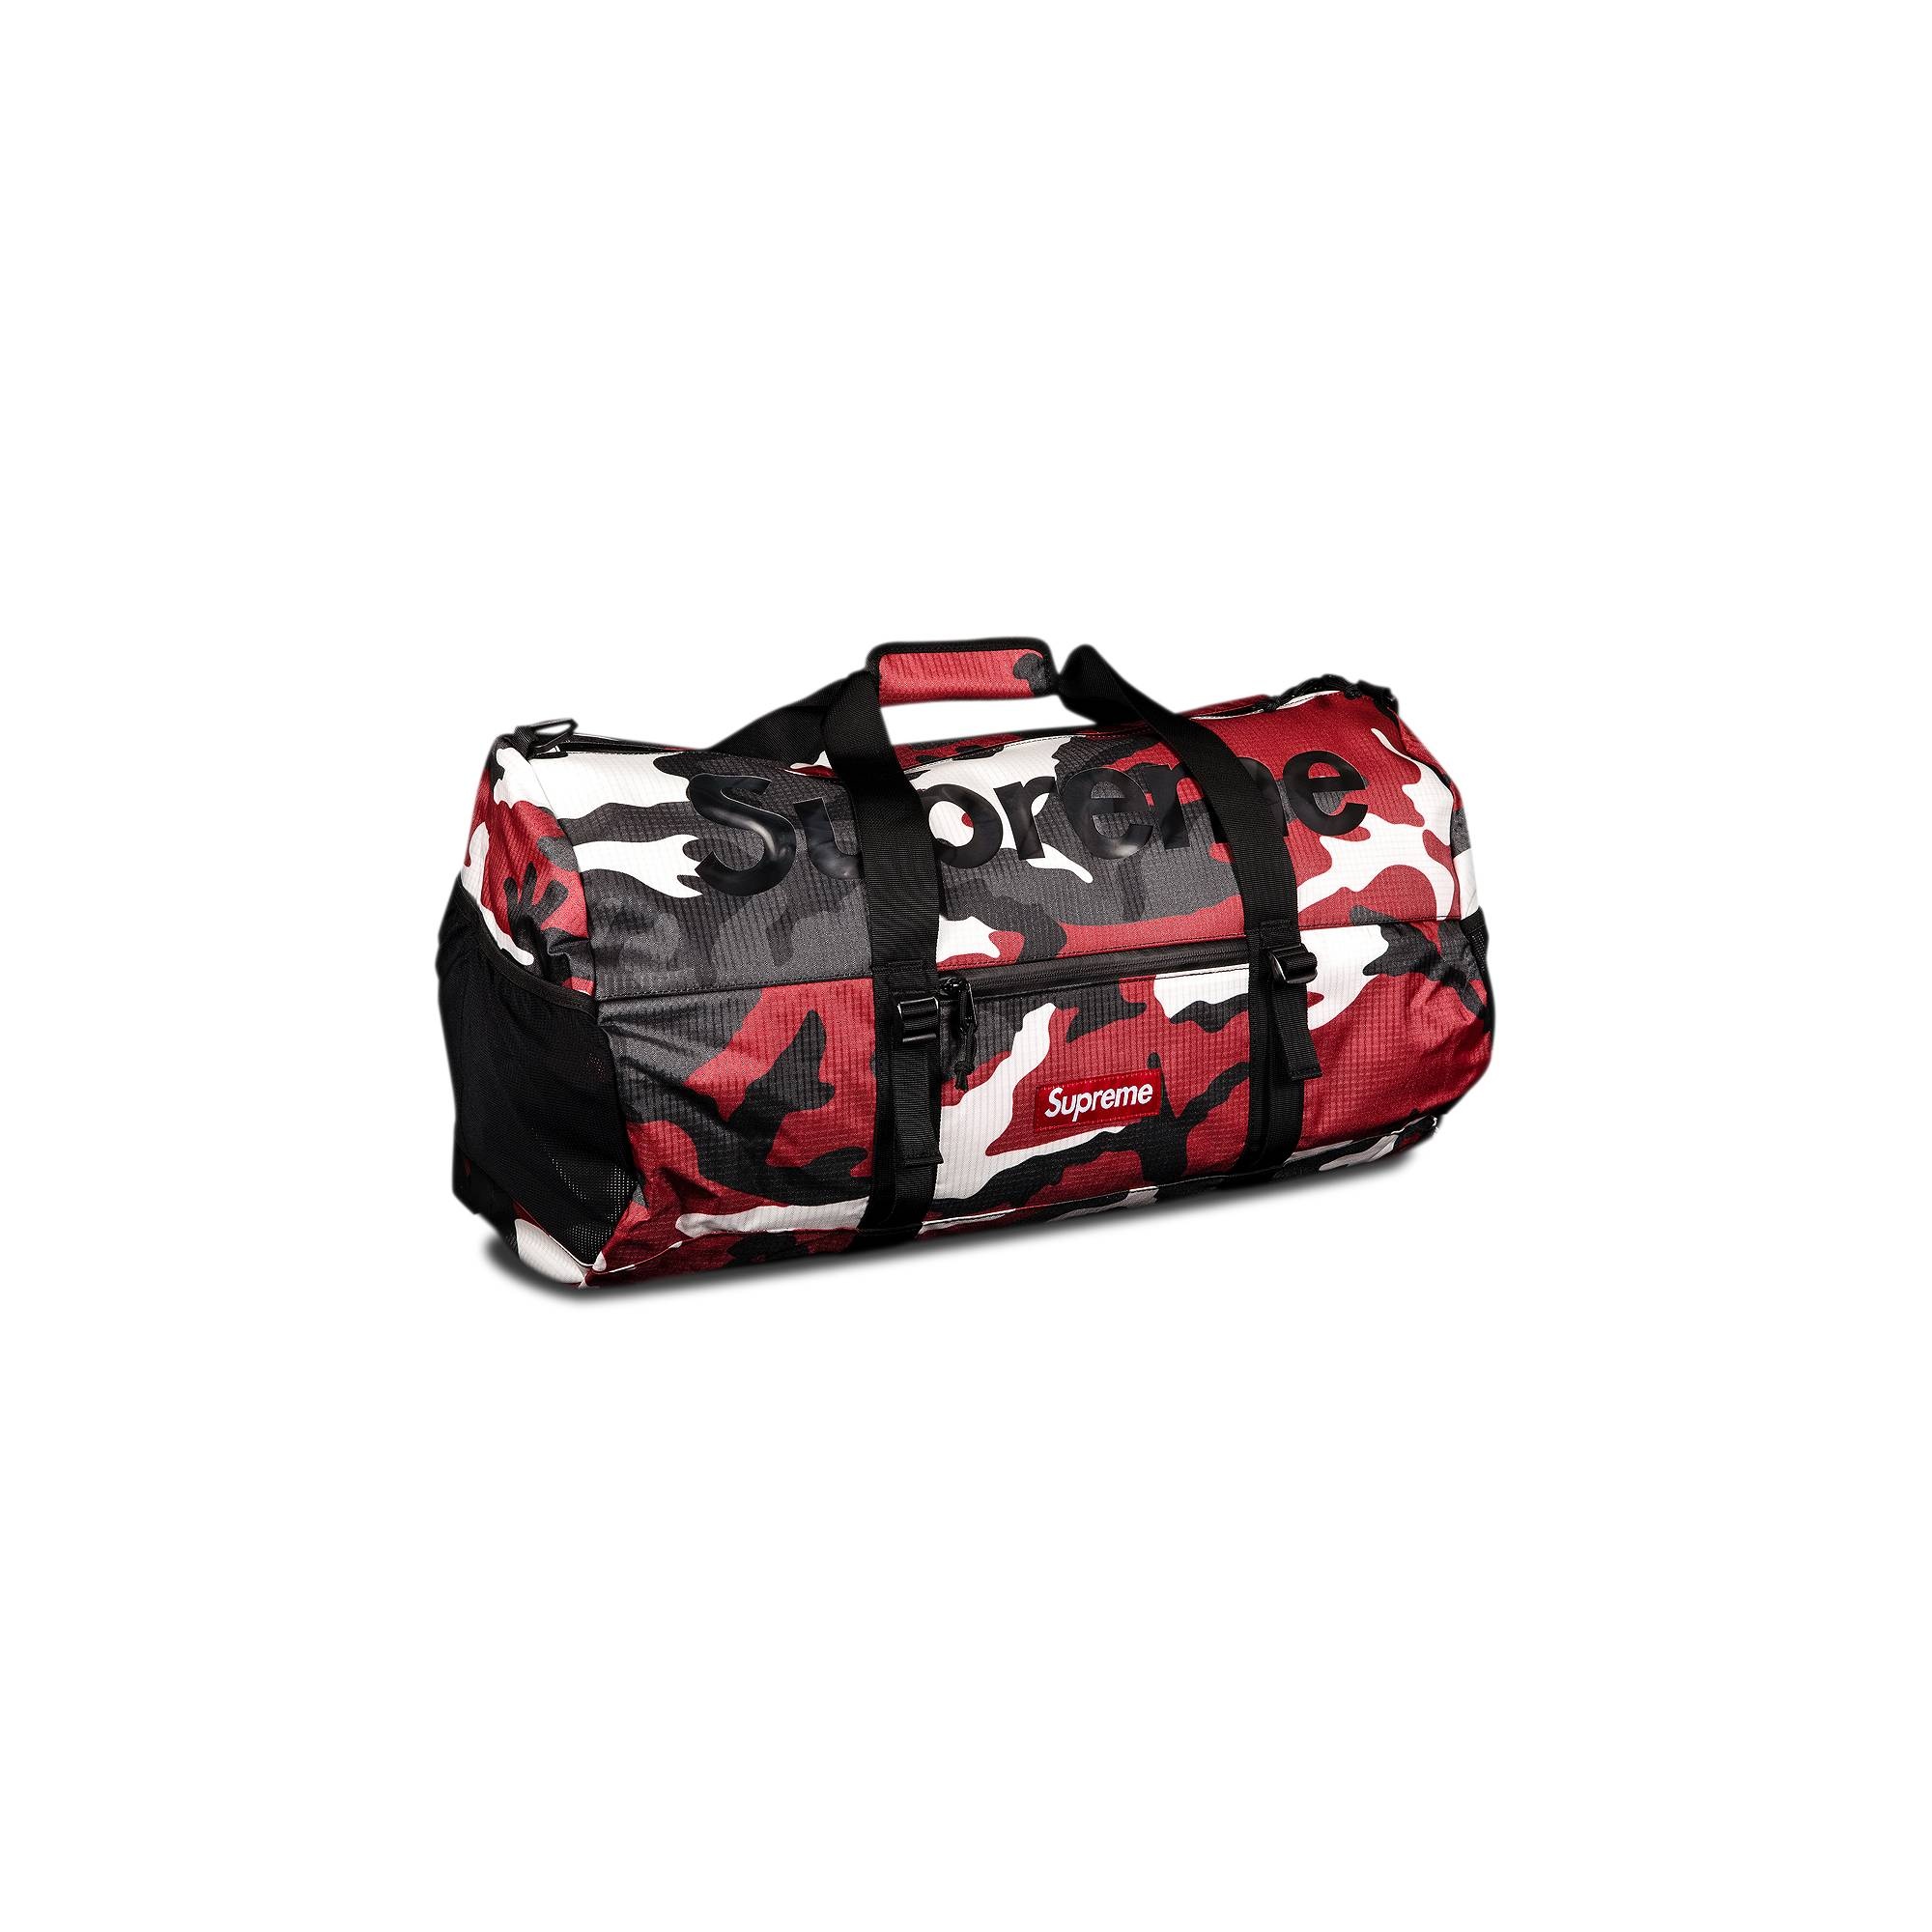 Supreme Duffle Bag 'Red Camo' - 1